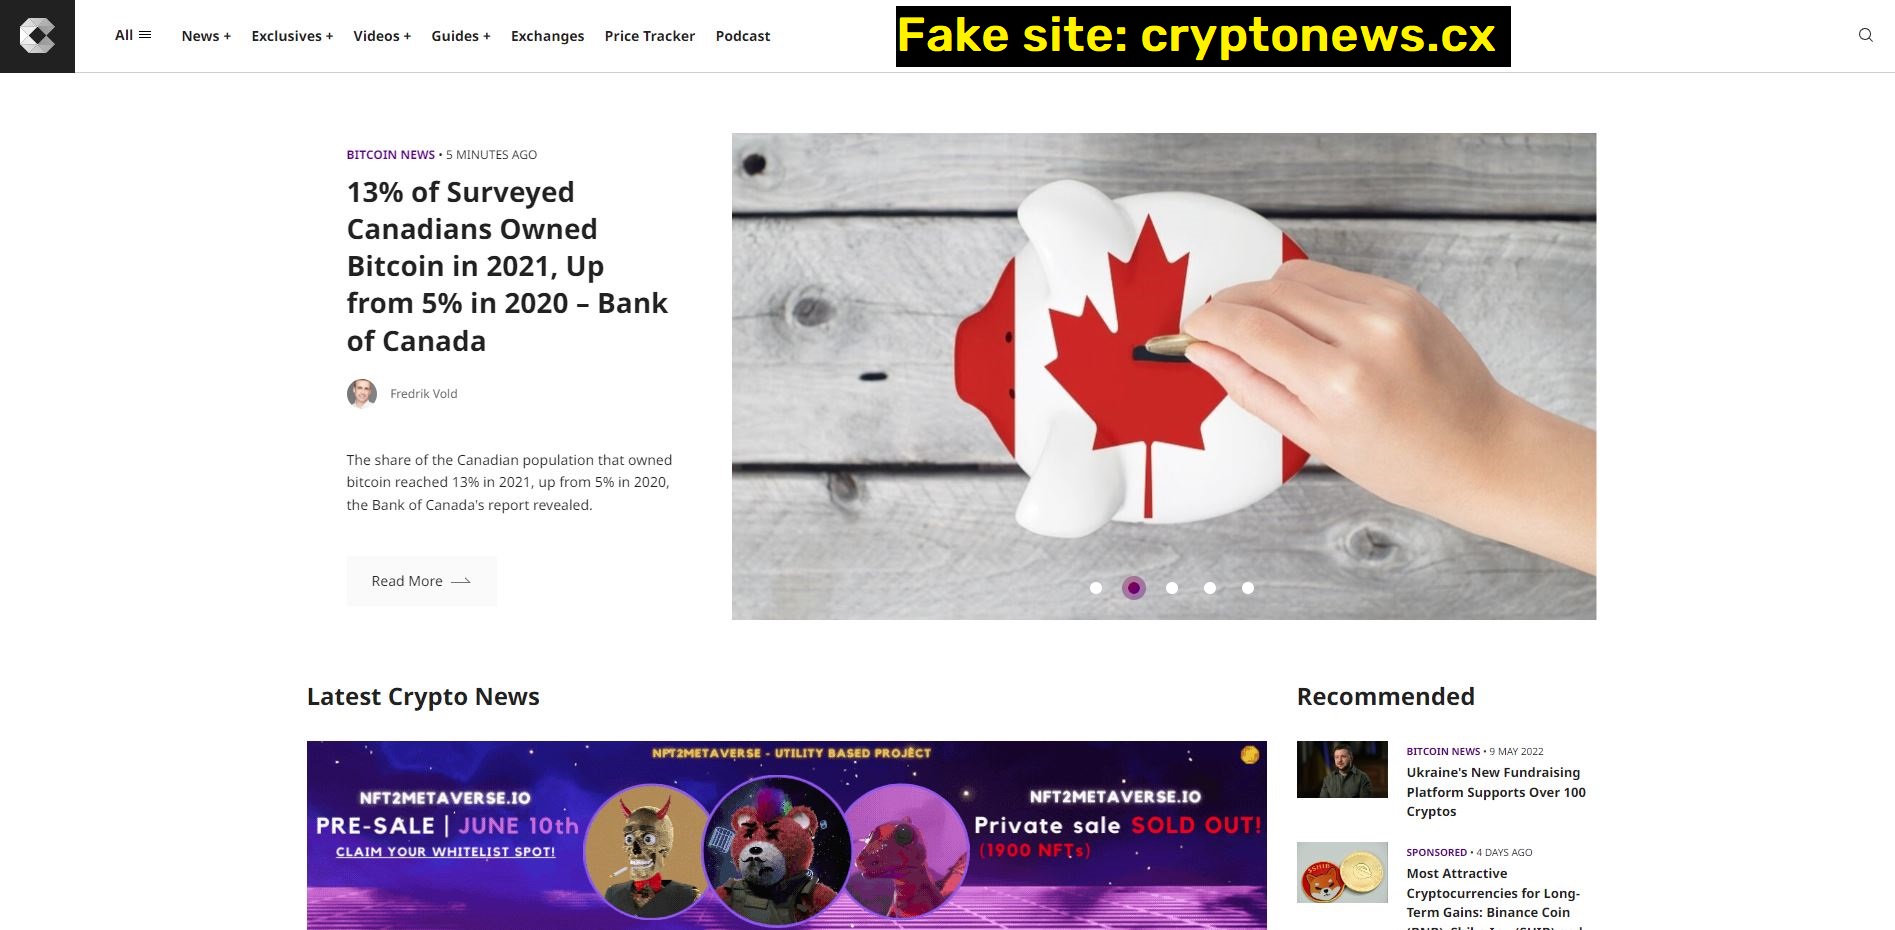 cryptonews.cx fake crypto news site